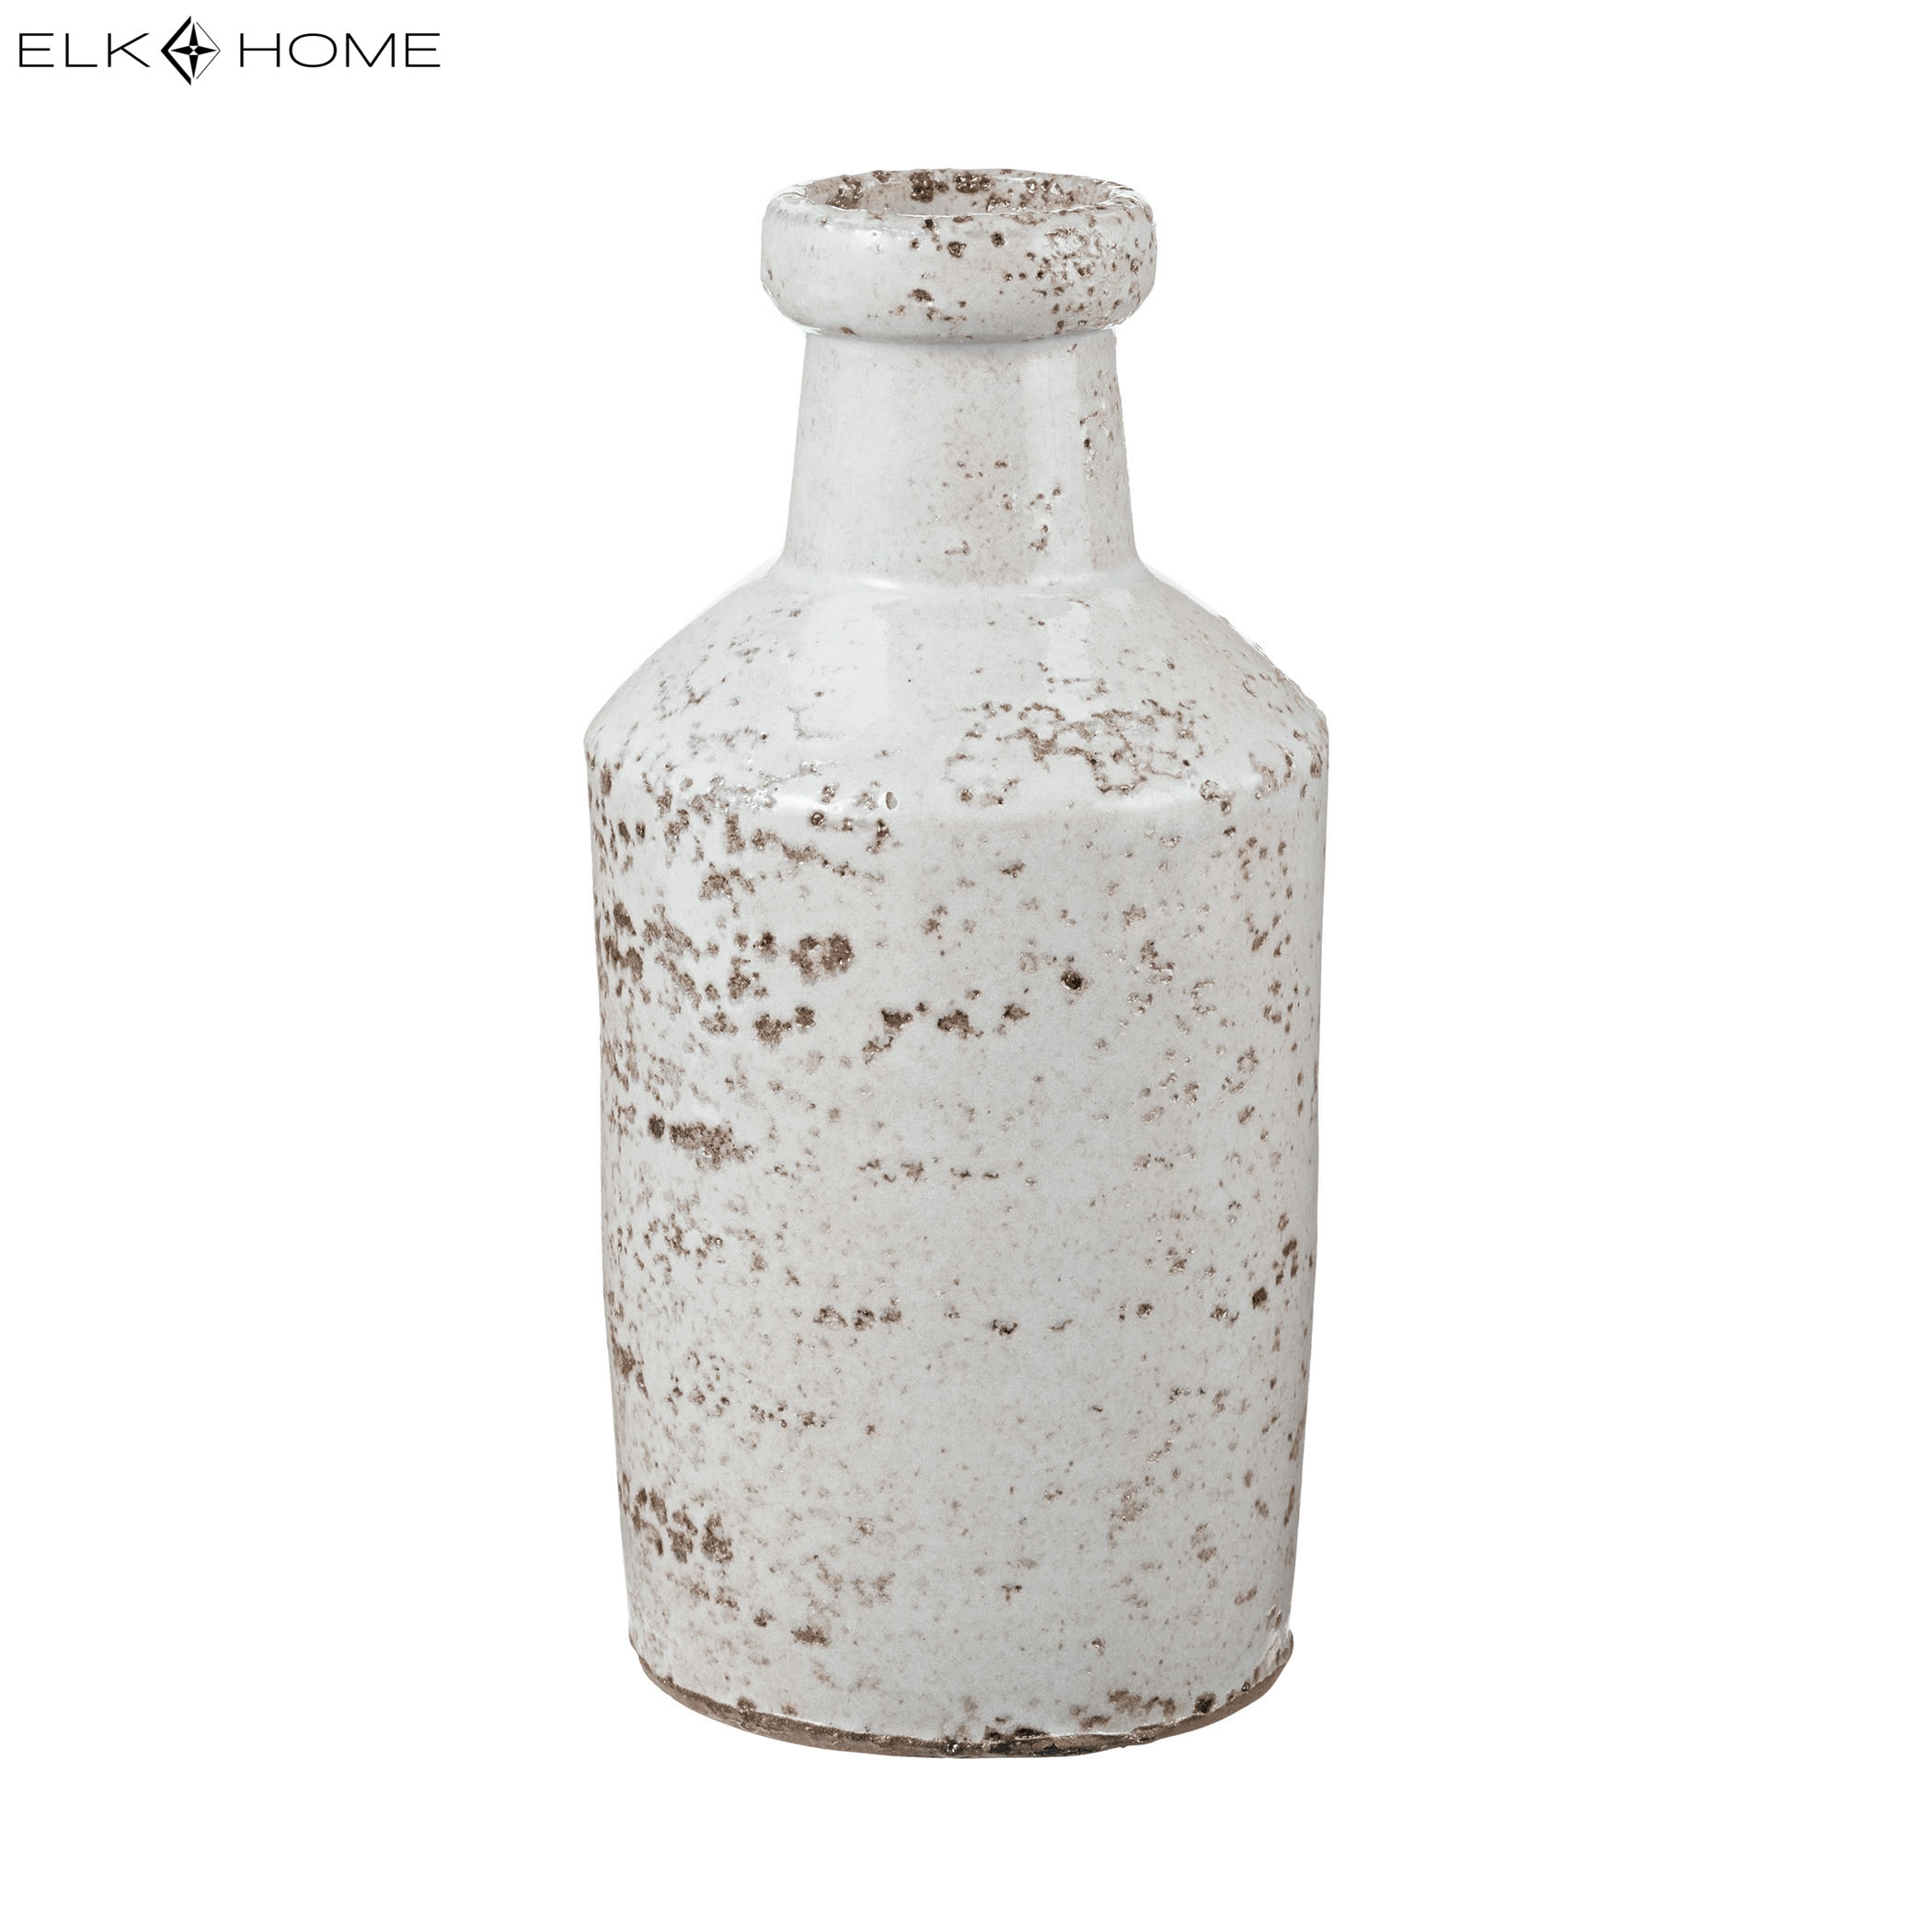 Rustic Bottle - White - Image 3